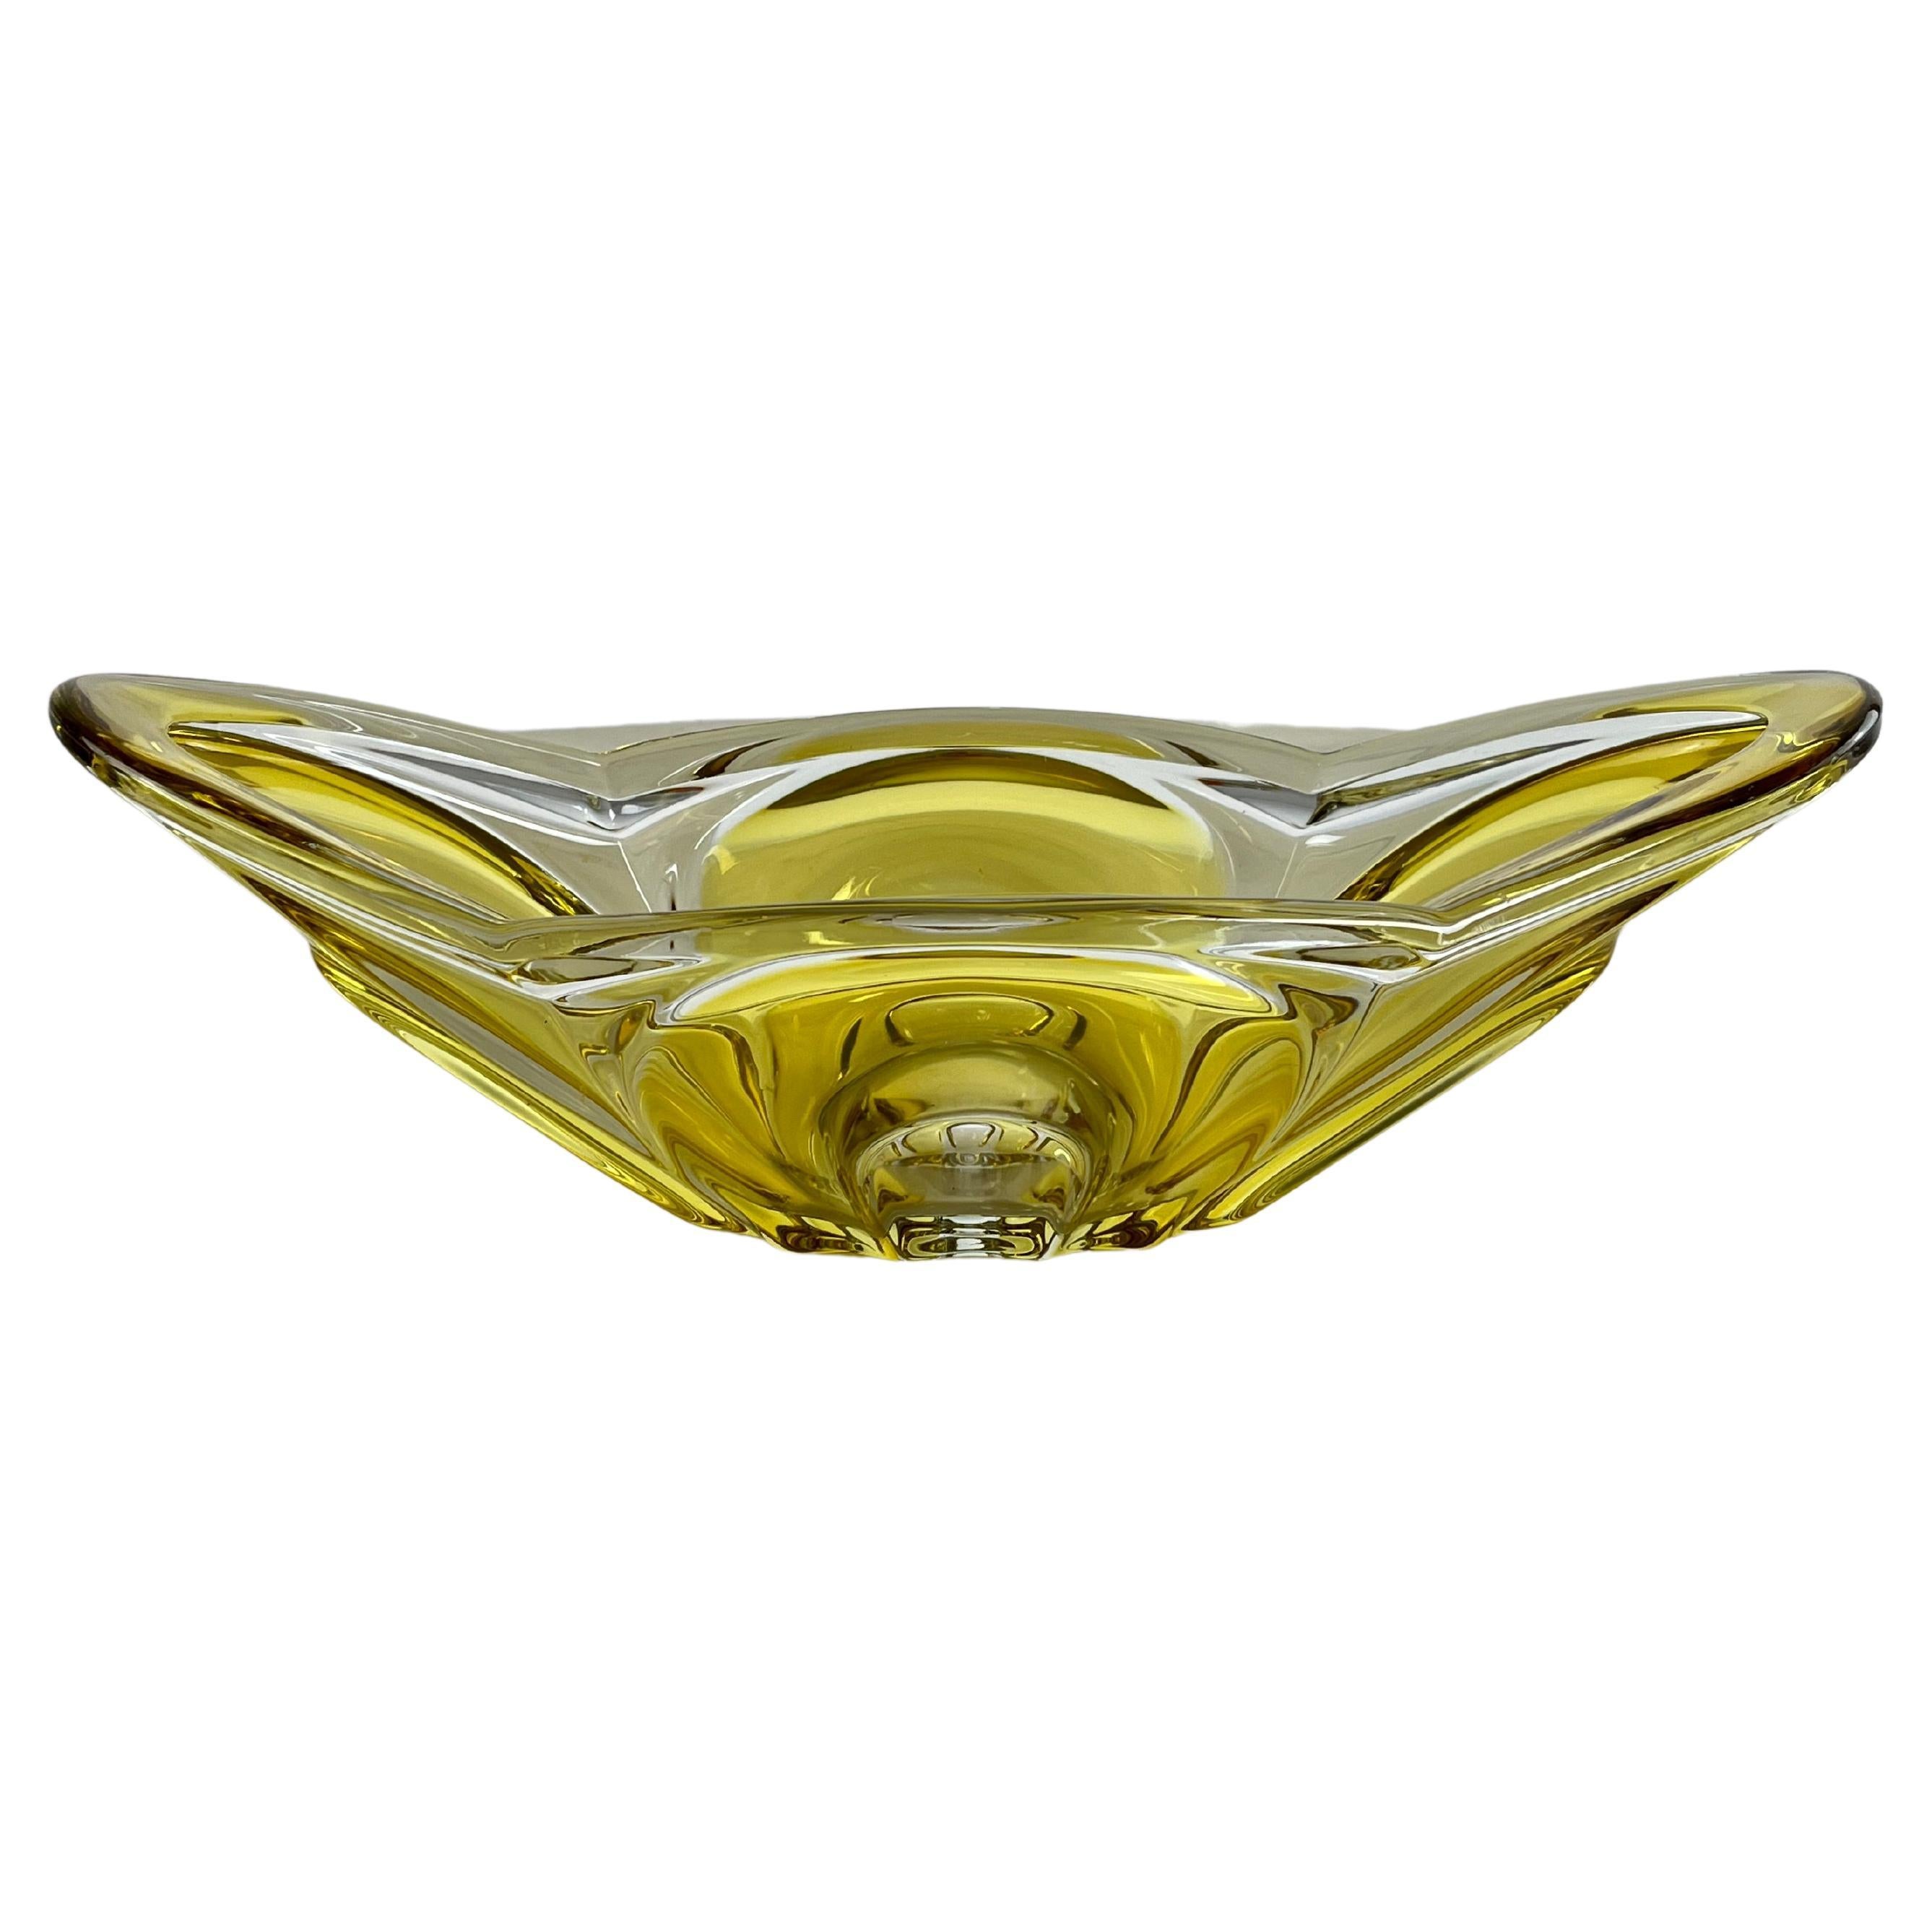 Mid-Century Murano Glass Centerpiece Italian Design 1960s